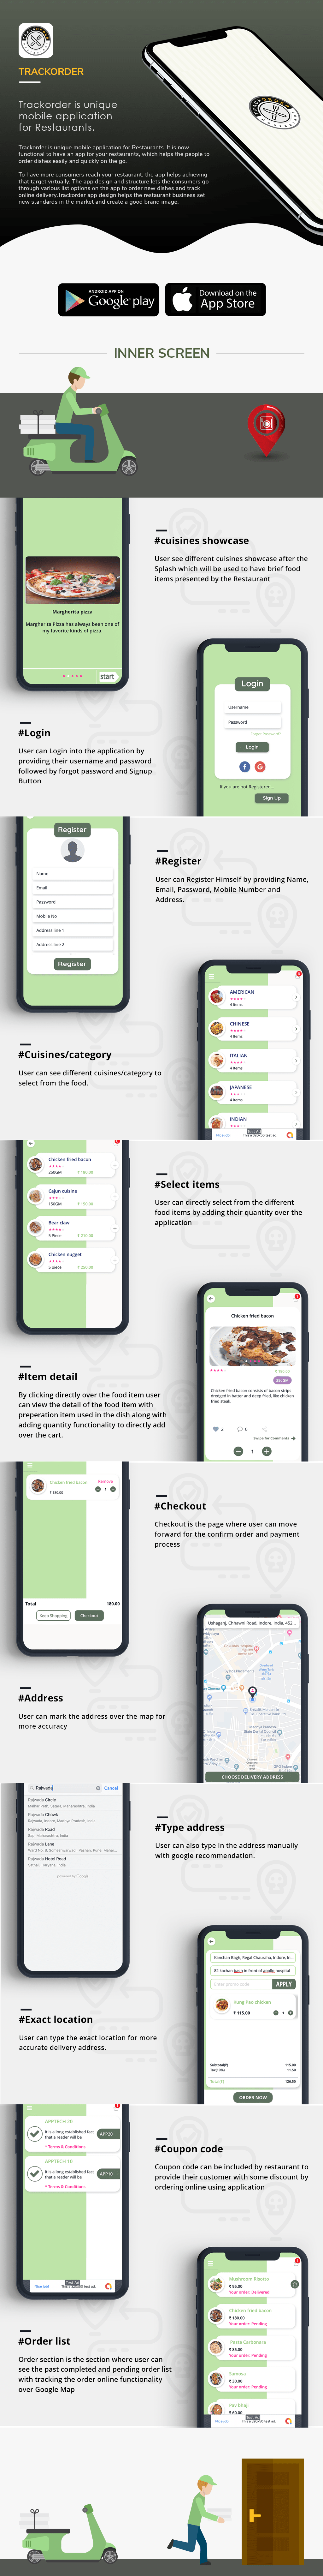 Mobile App for Online Restaurant Food Ordering